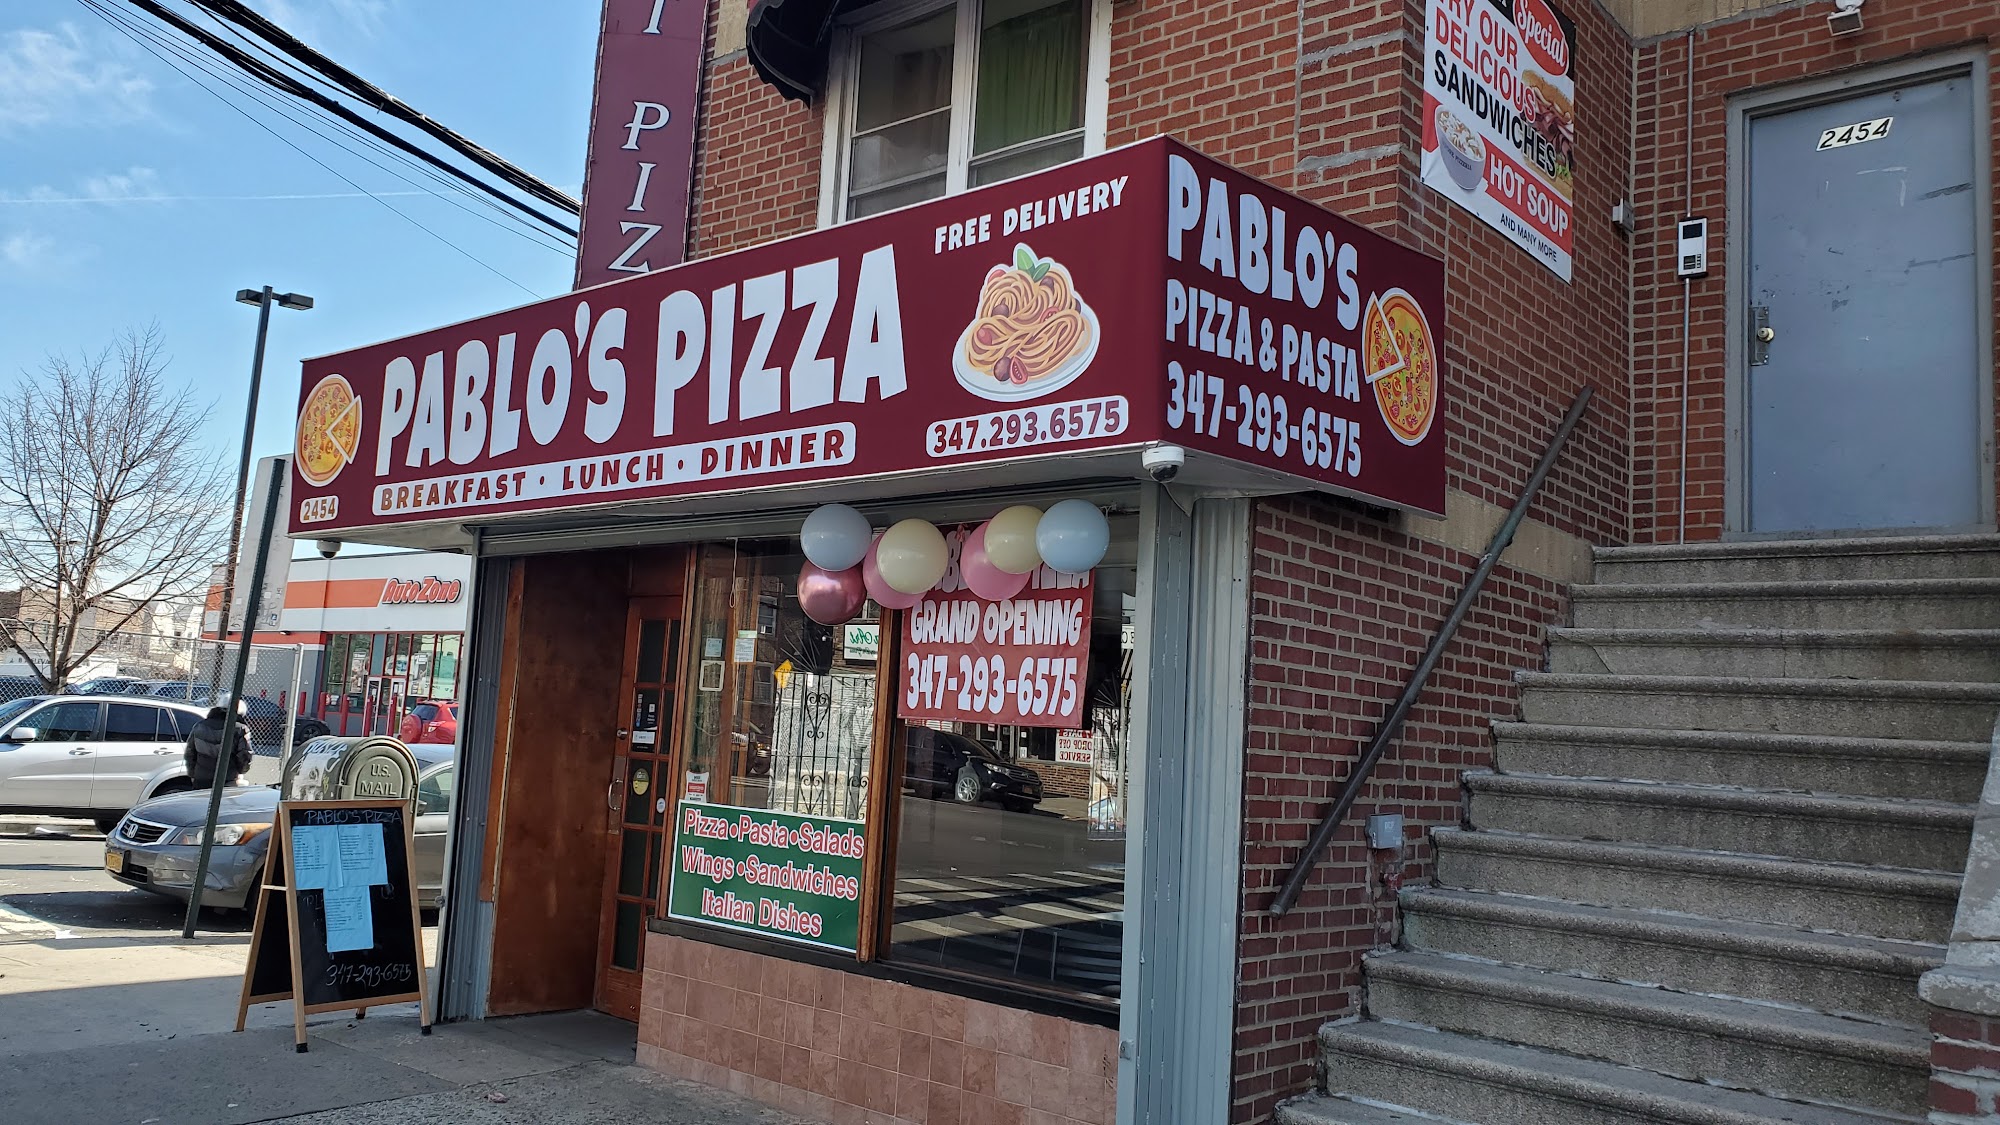 Pablo's pizza